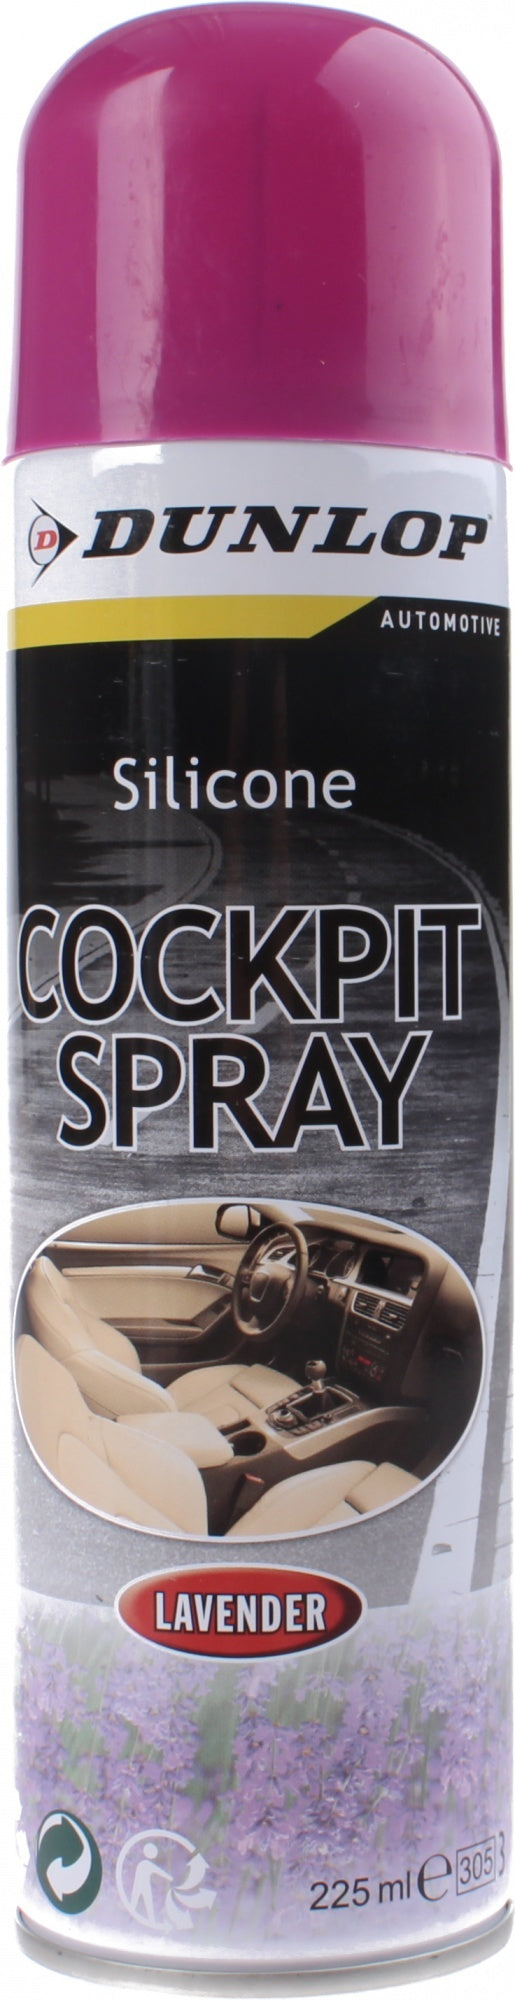 Dunlop Silicone Lavendel - Cockpit Spray 225ml